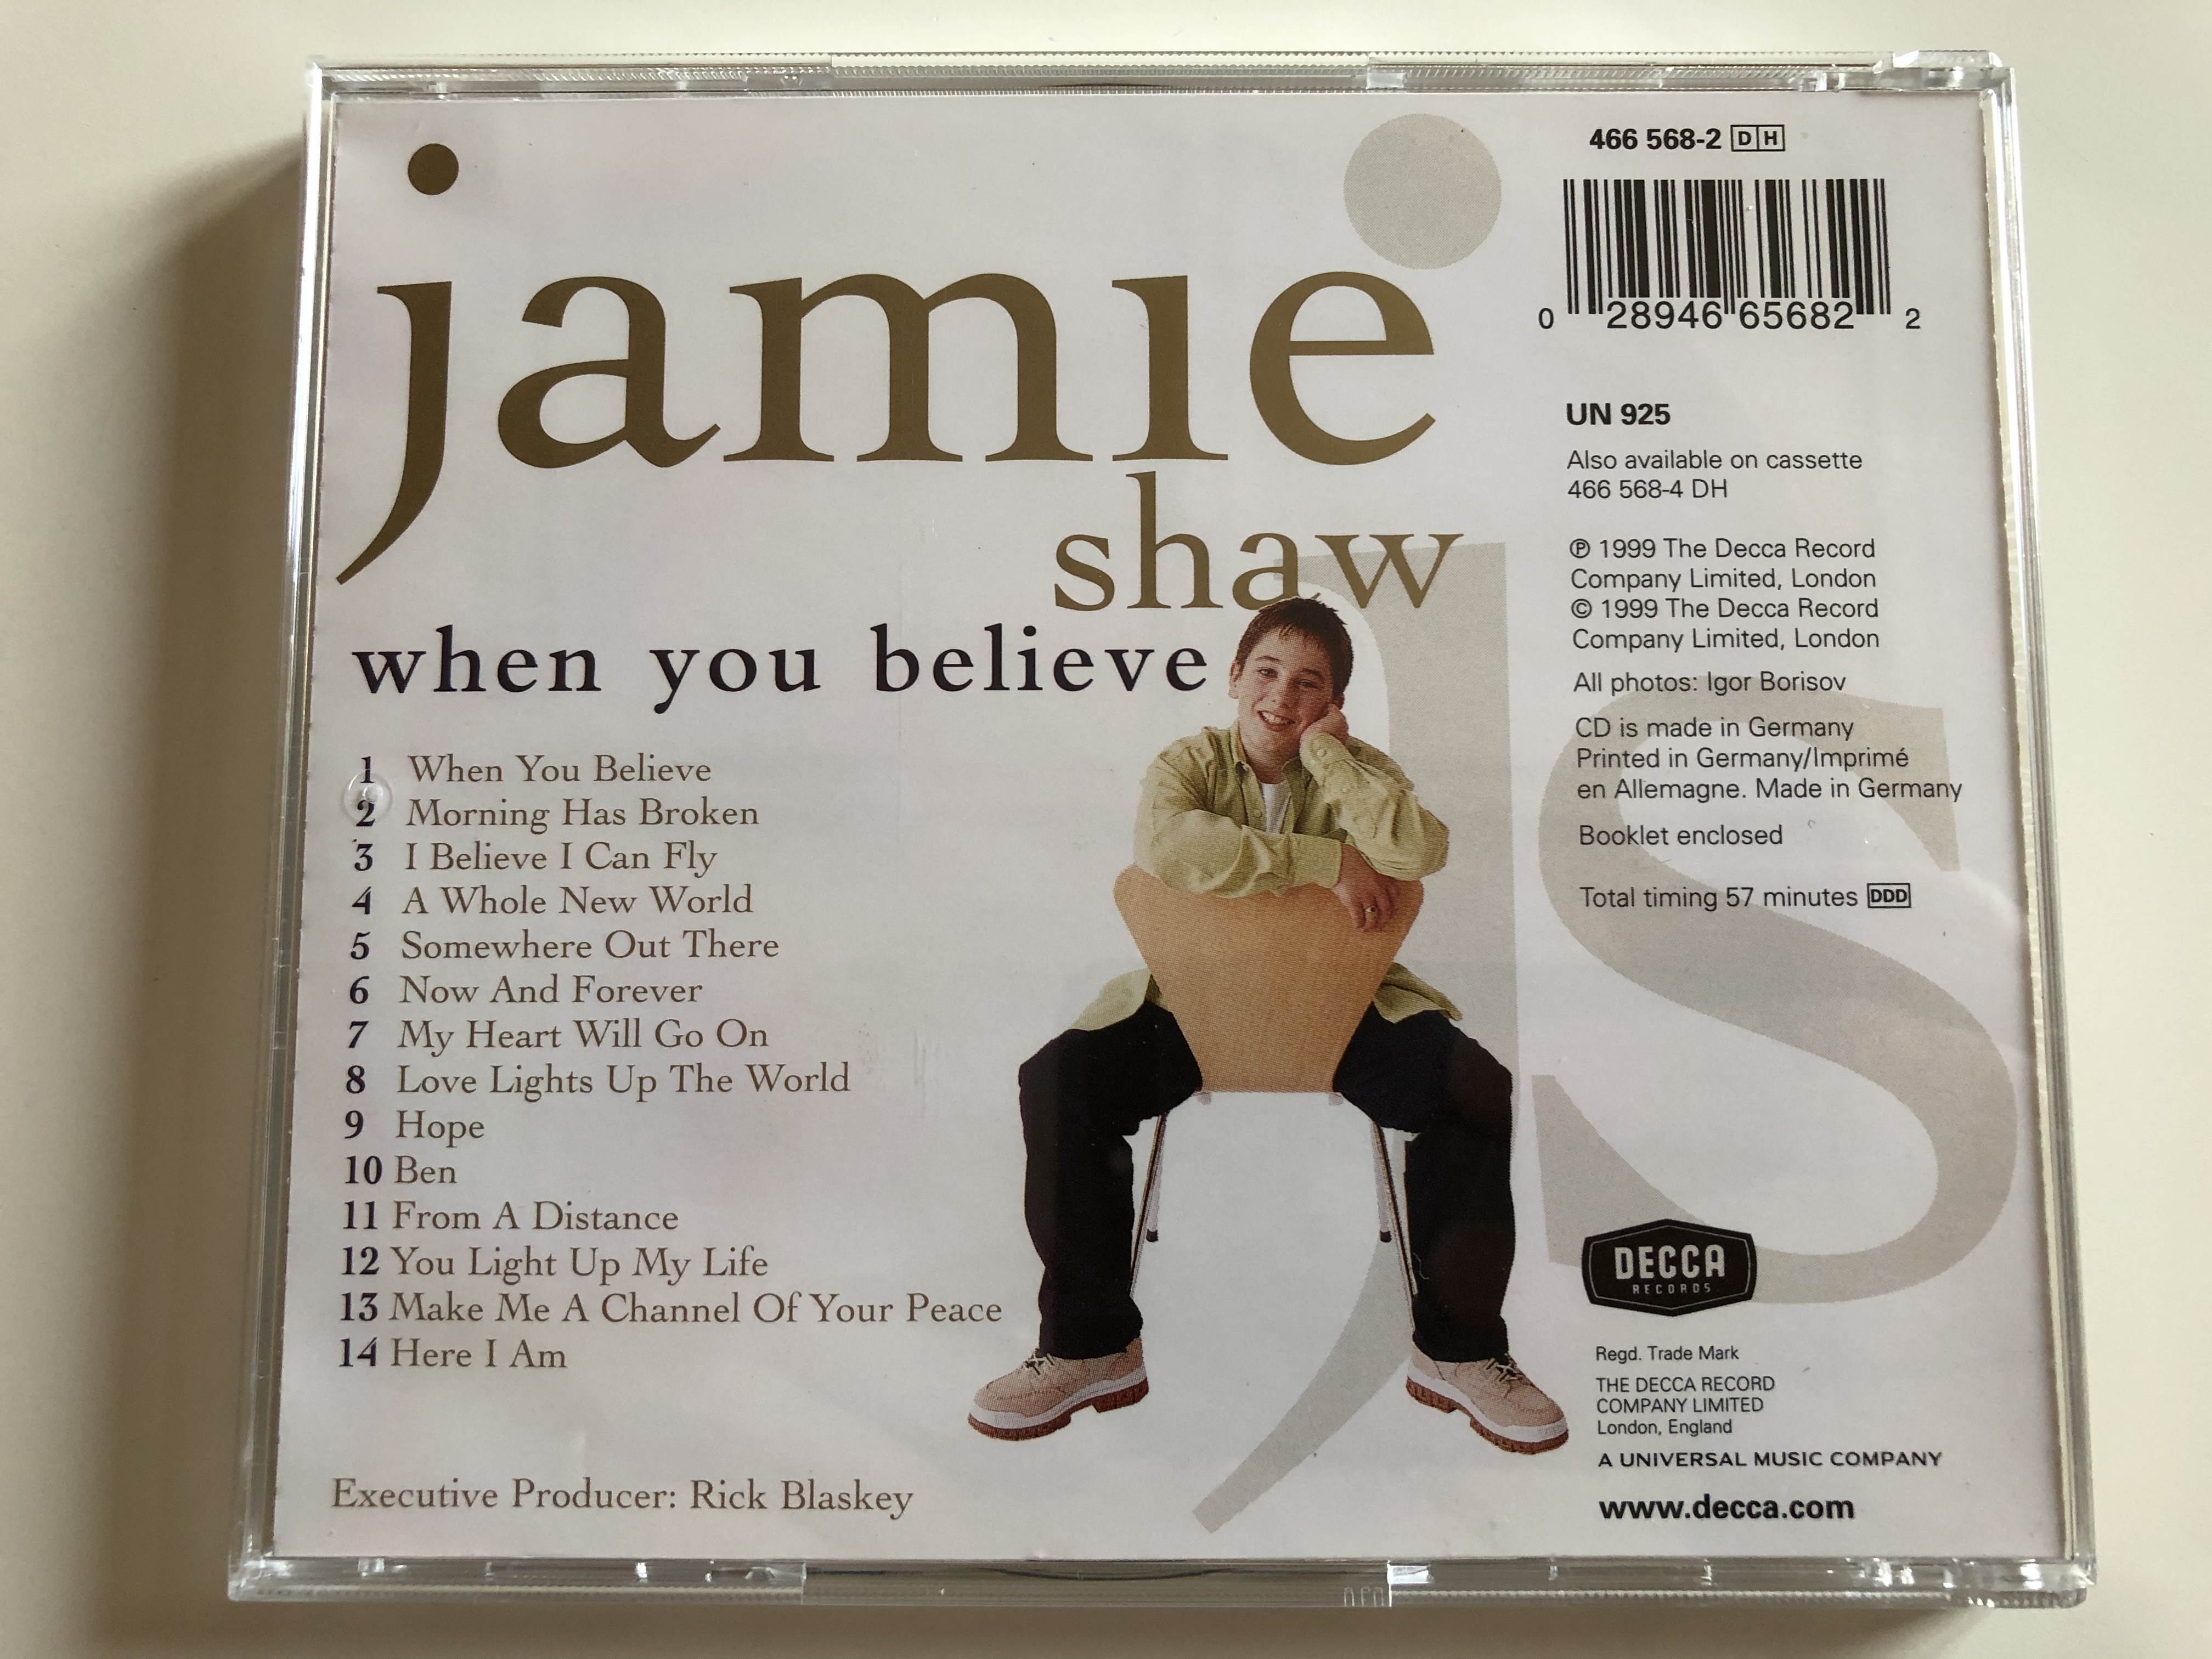 jamie-shaw-when-you-believe-decca-audio-cd-1999-stereo-466-568-2-6-.jpg